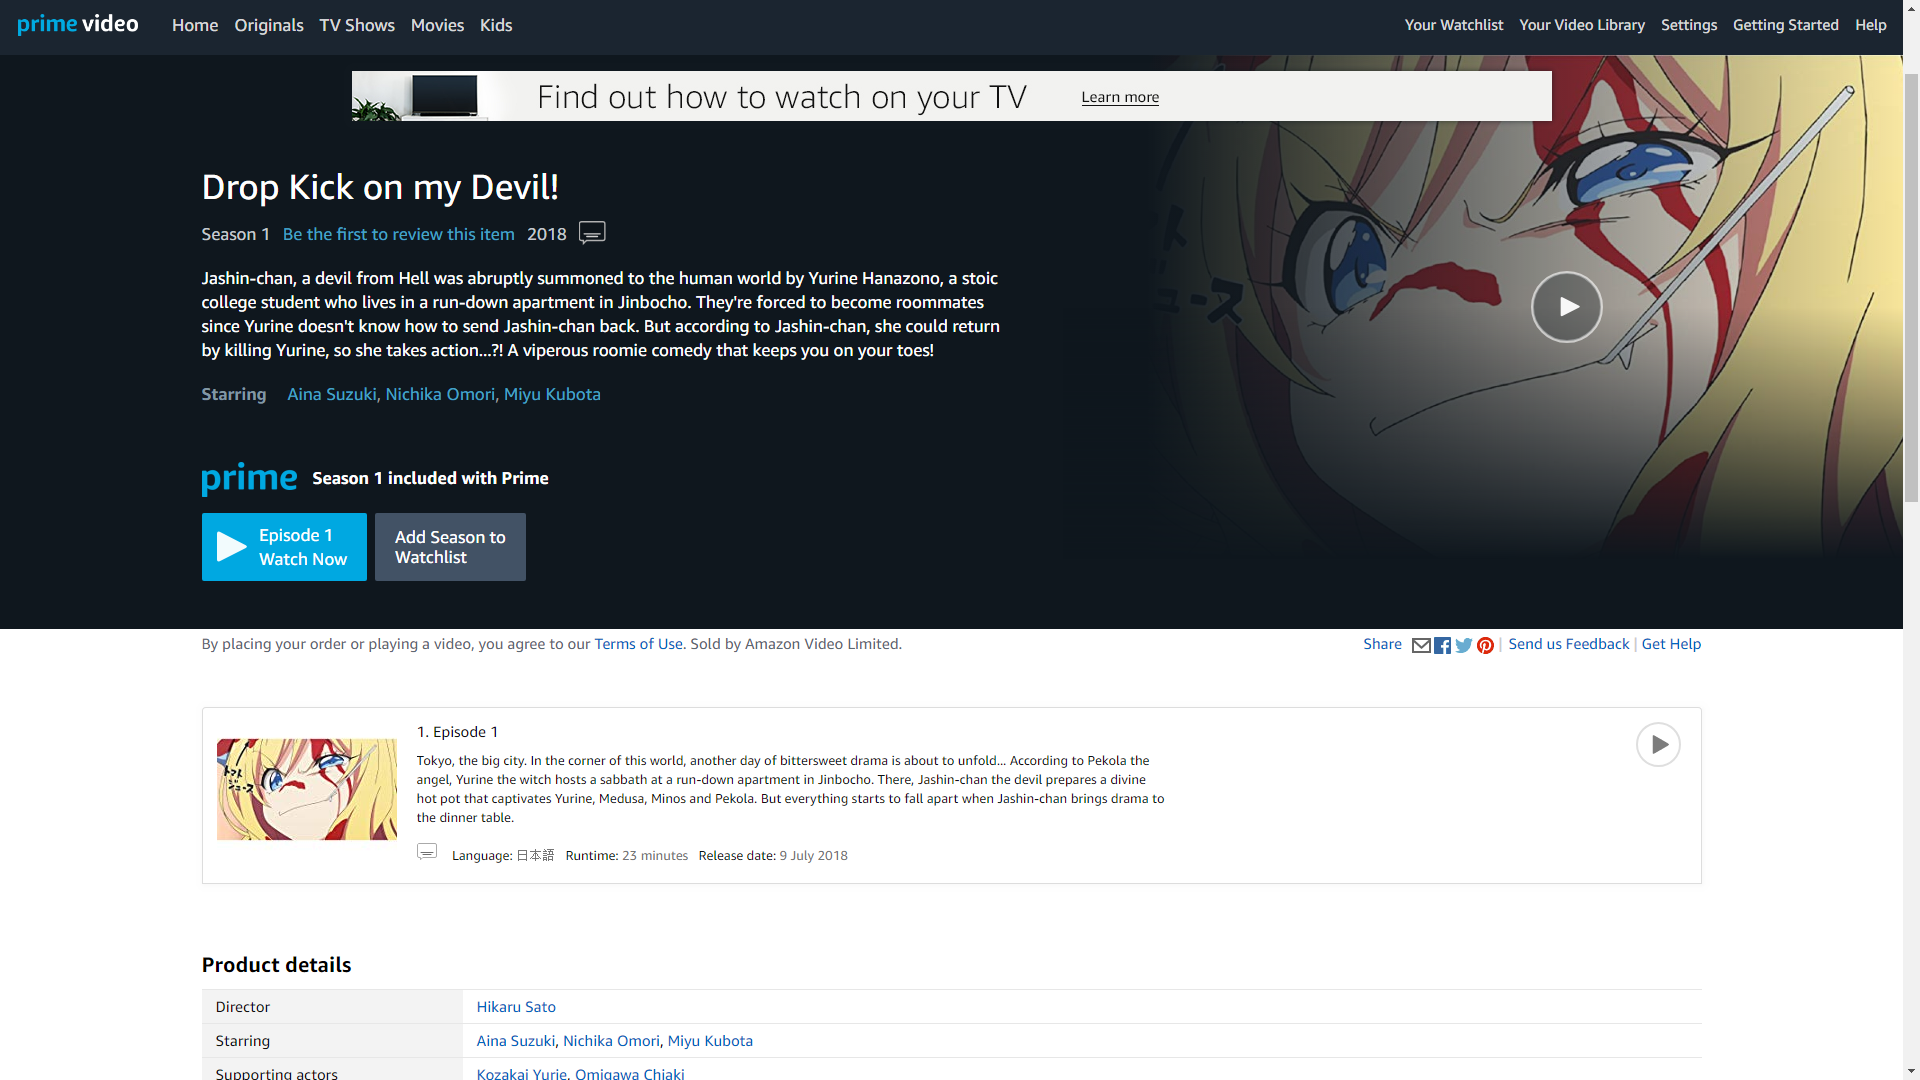 Prime Video Japan has begun streaming Dropkick on My Devil